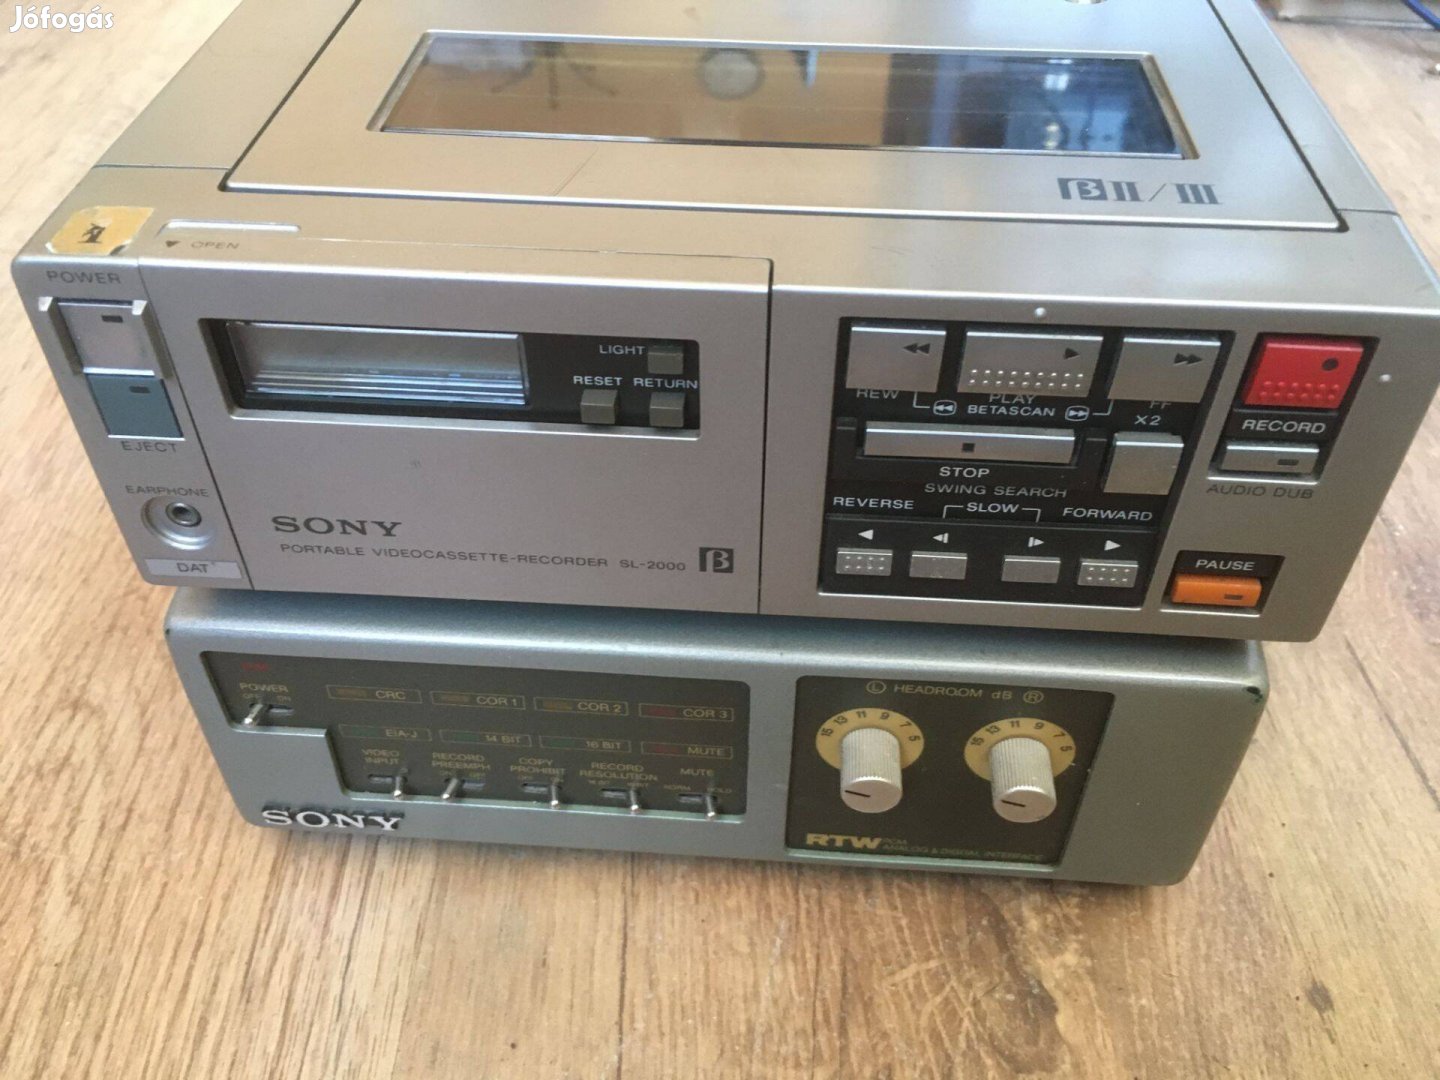 Sony SL2000 Betamax PCM dekóderrel nagyon ritka darab